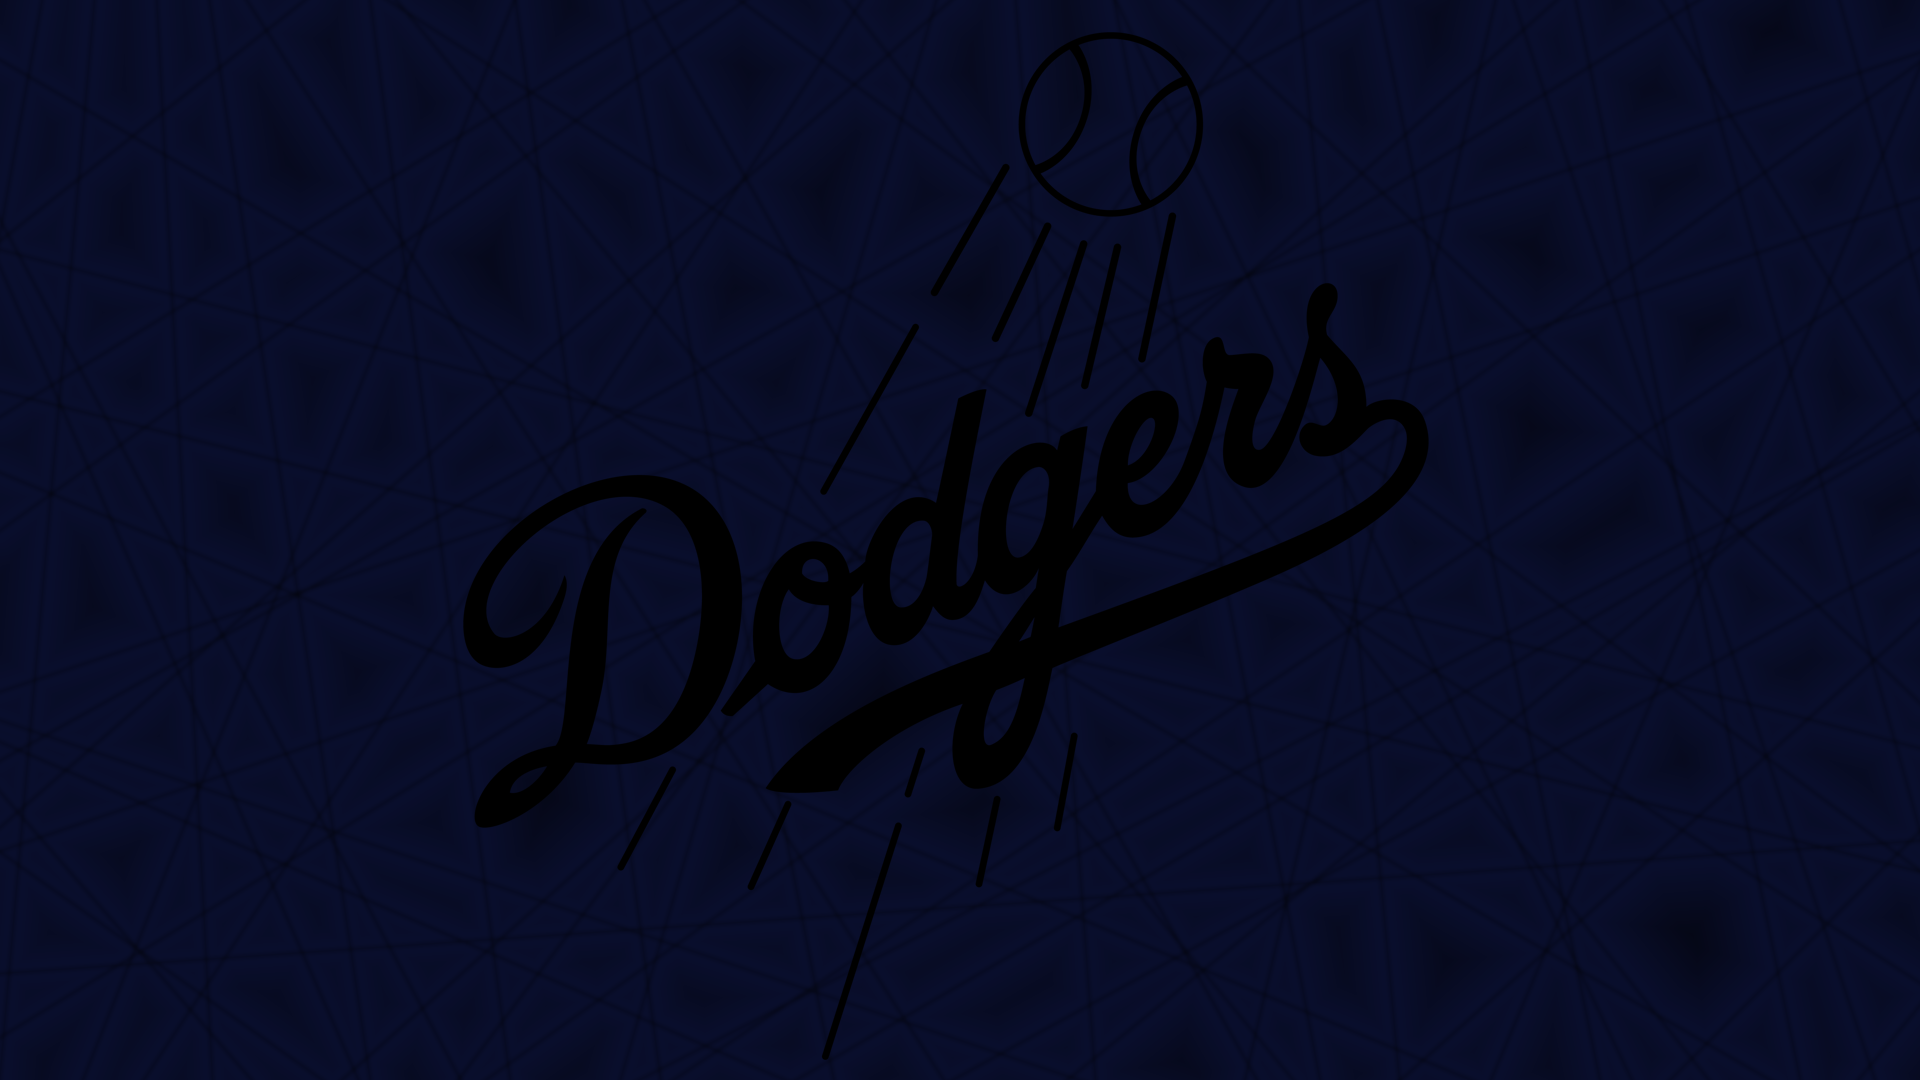 Los Angeles Dodgers Wallpaper Archives.com